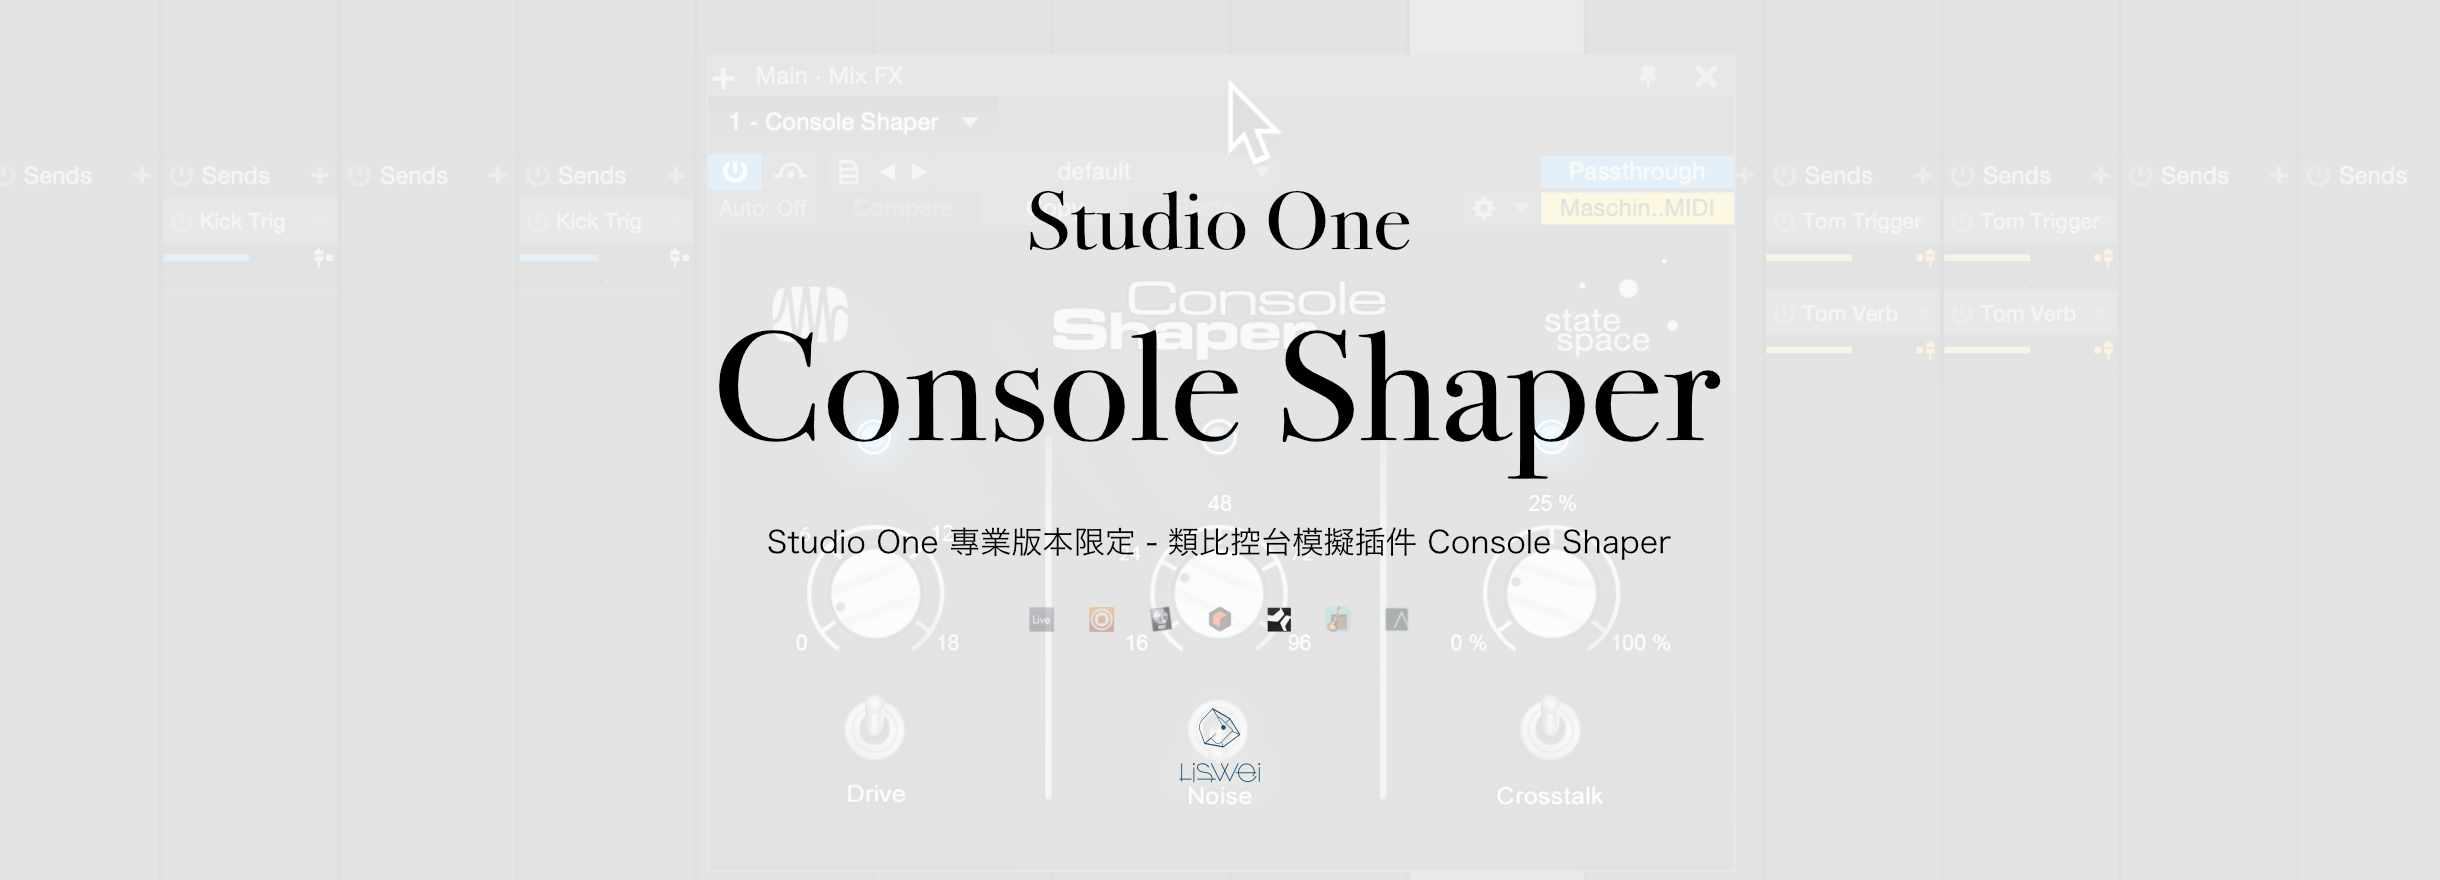 Studio One 專業版本限定 - 類比控台模擬插件 Console Shaper